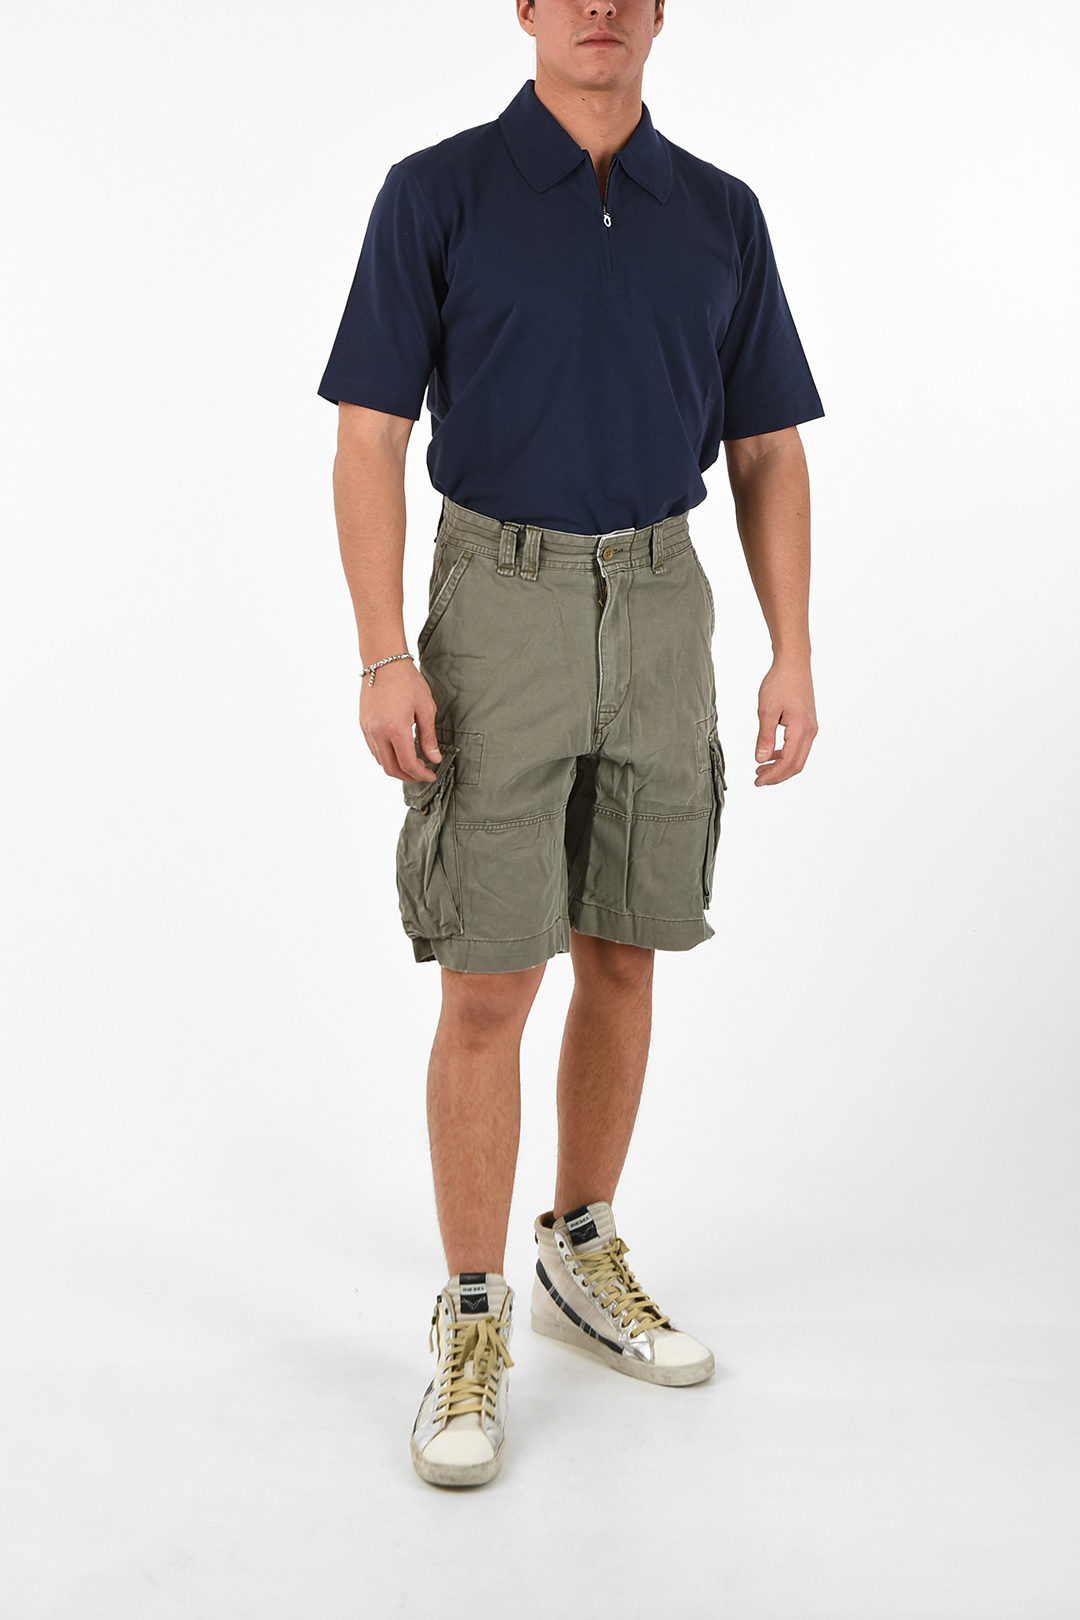 Polo Ralph Lauren cargo shorts men - Glamood Outlet